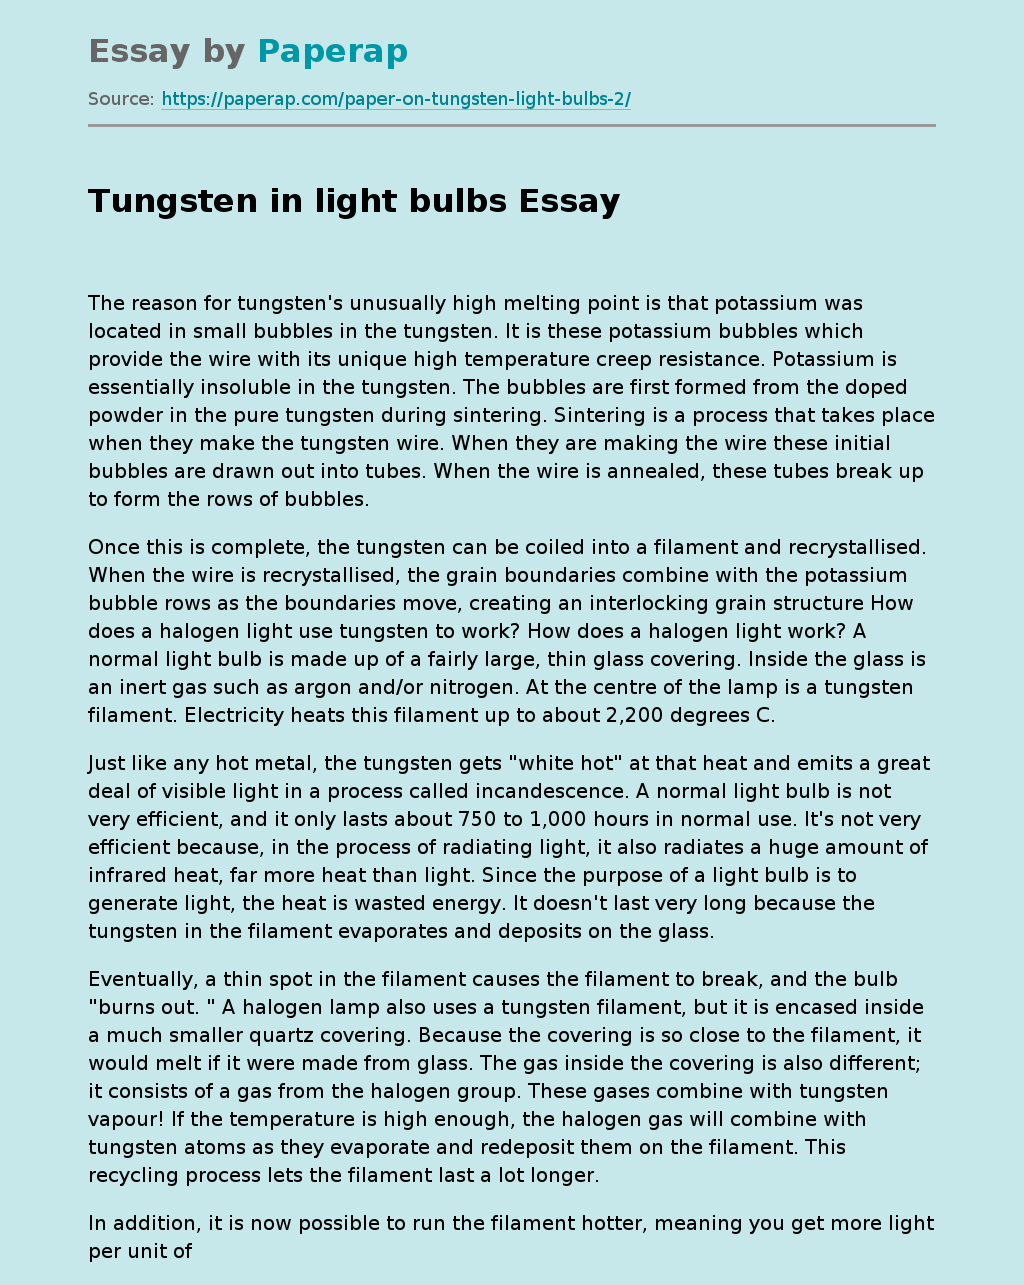 Tungsten in light bulbs